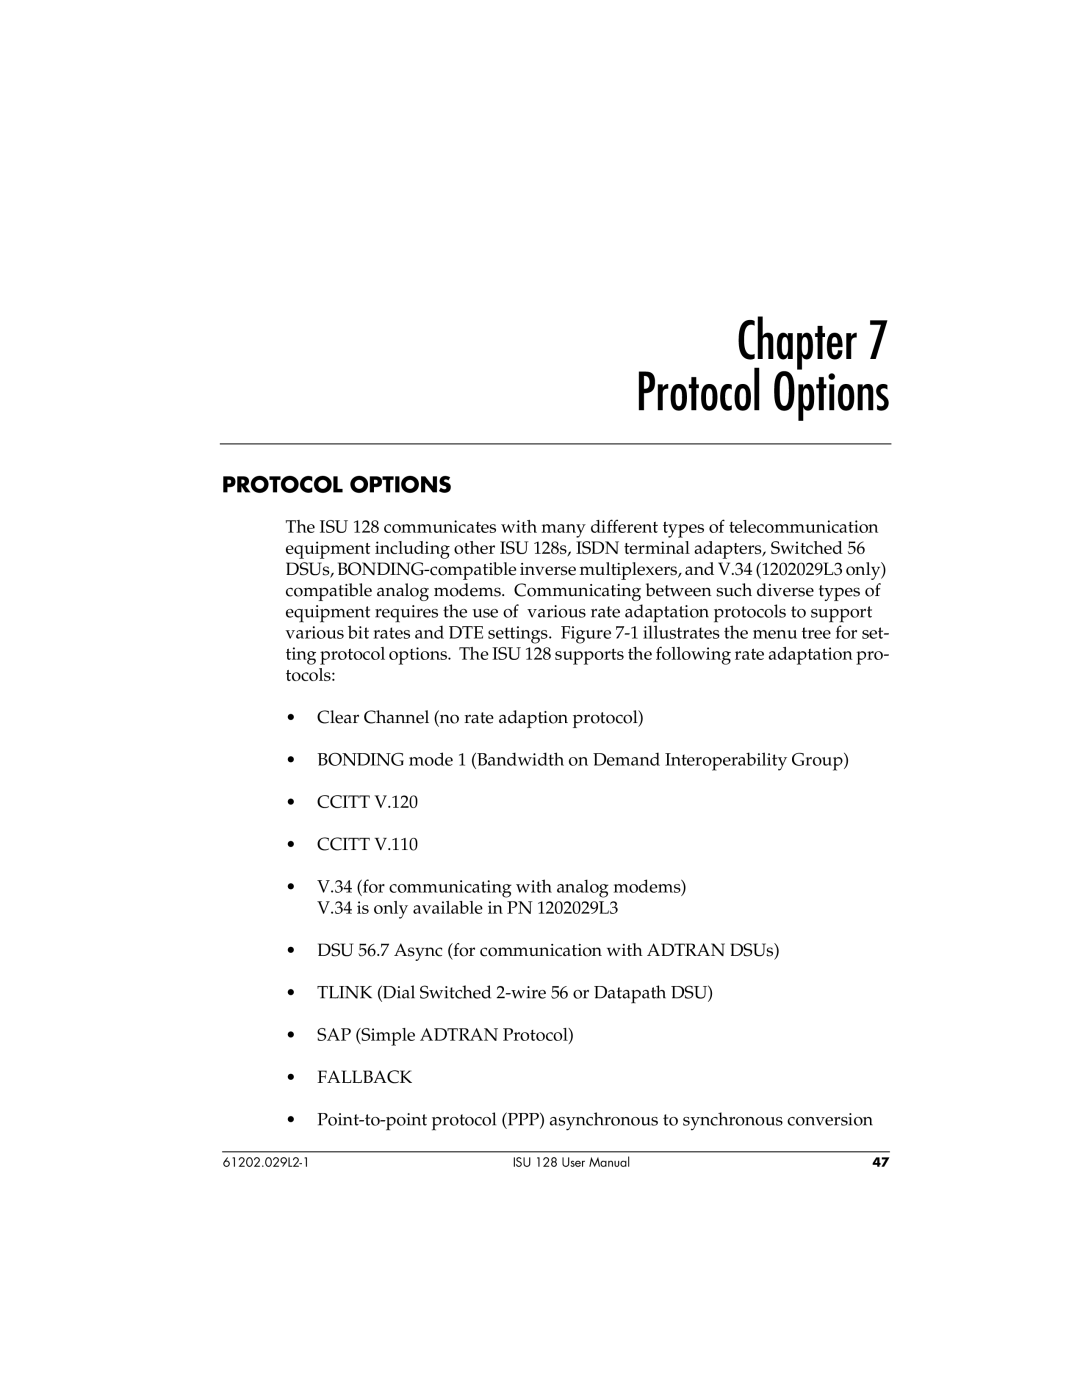 ADTRAN ISU 128 user manual Chapter Protocol Options 